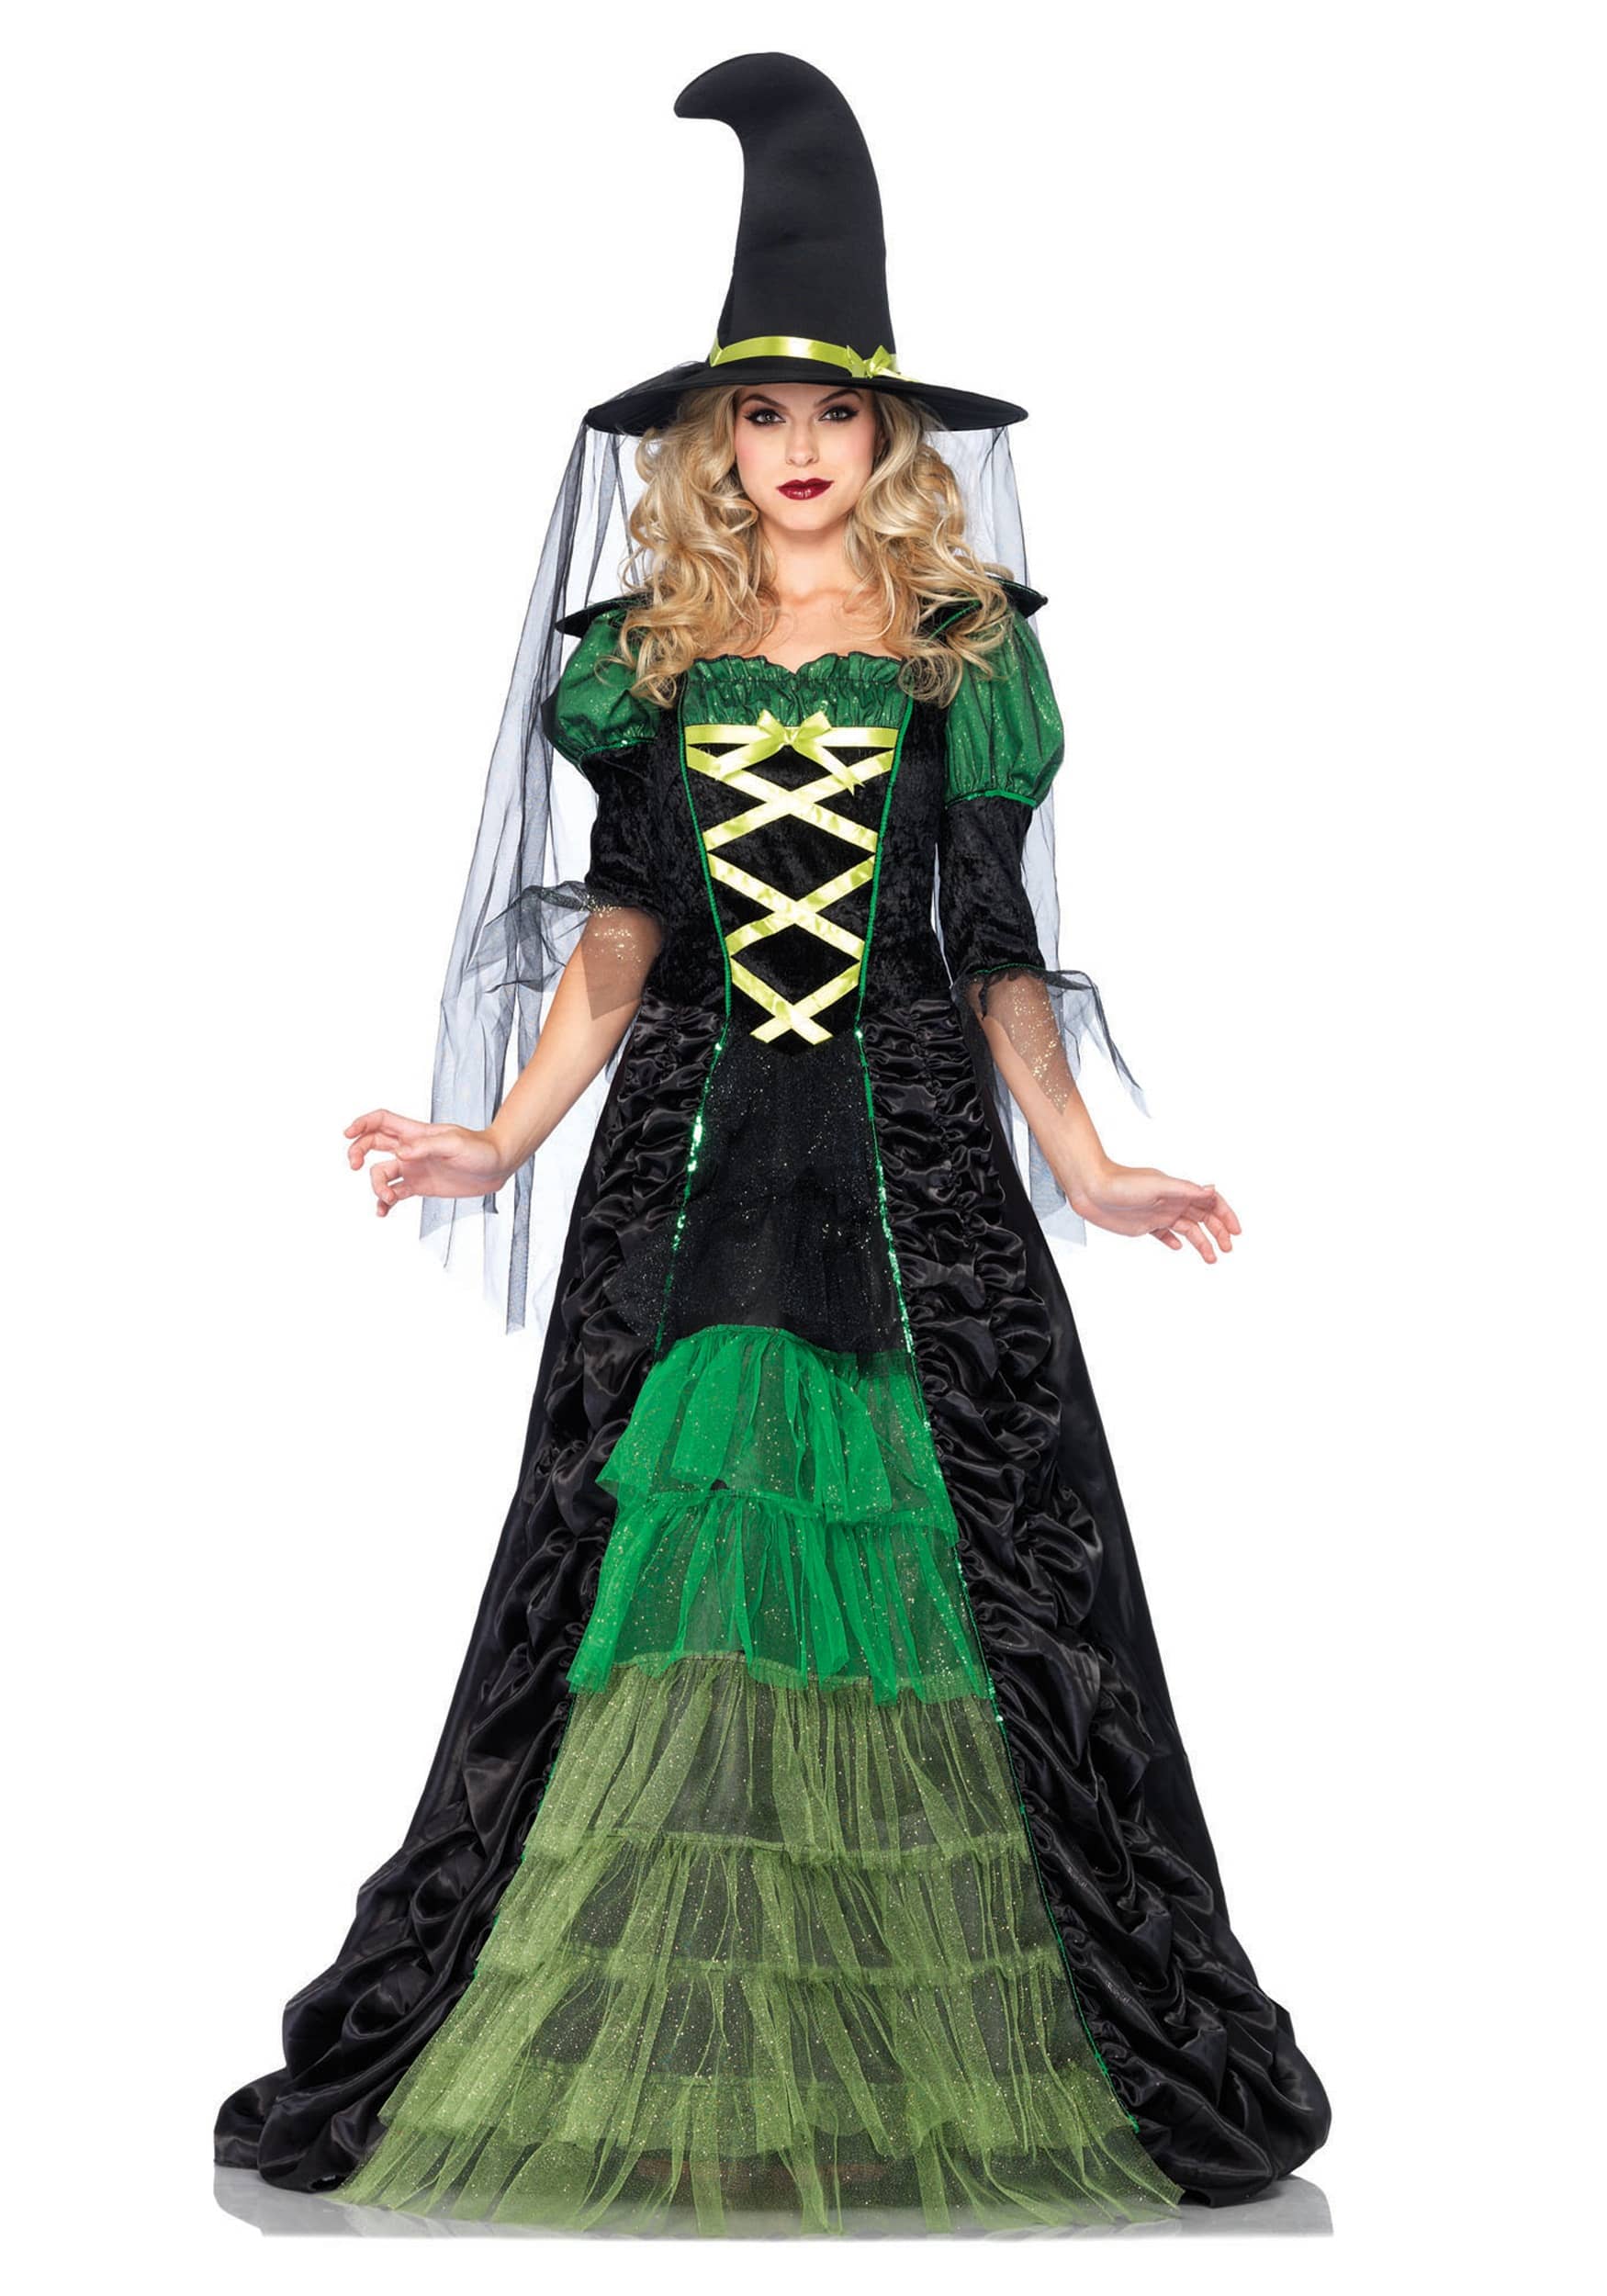 50 Best Halloween Witch Costume Ideas For Women To Wear In 2021